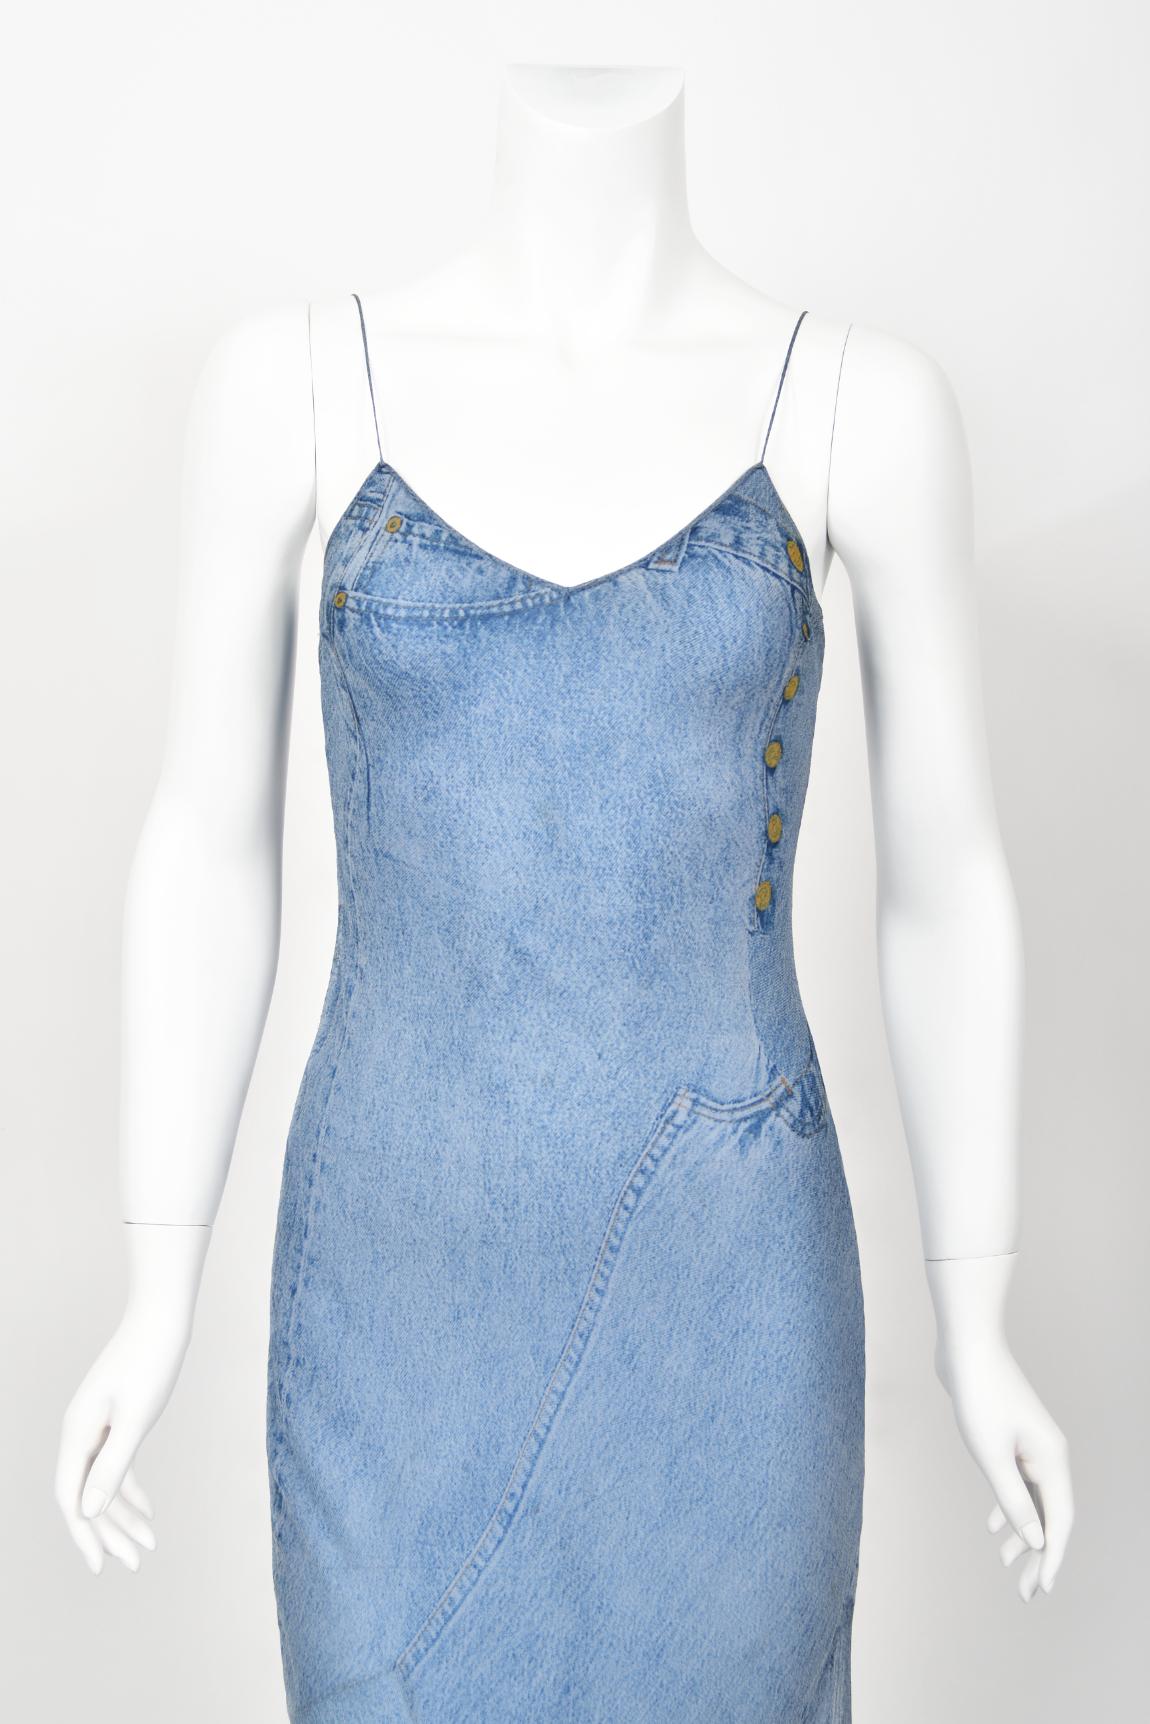 2000 Christian Dior by Galliano Trompe L'oeil Denim Print Silk Bias-Cut Dress For Sale 2